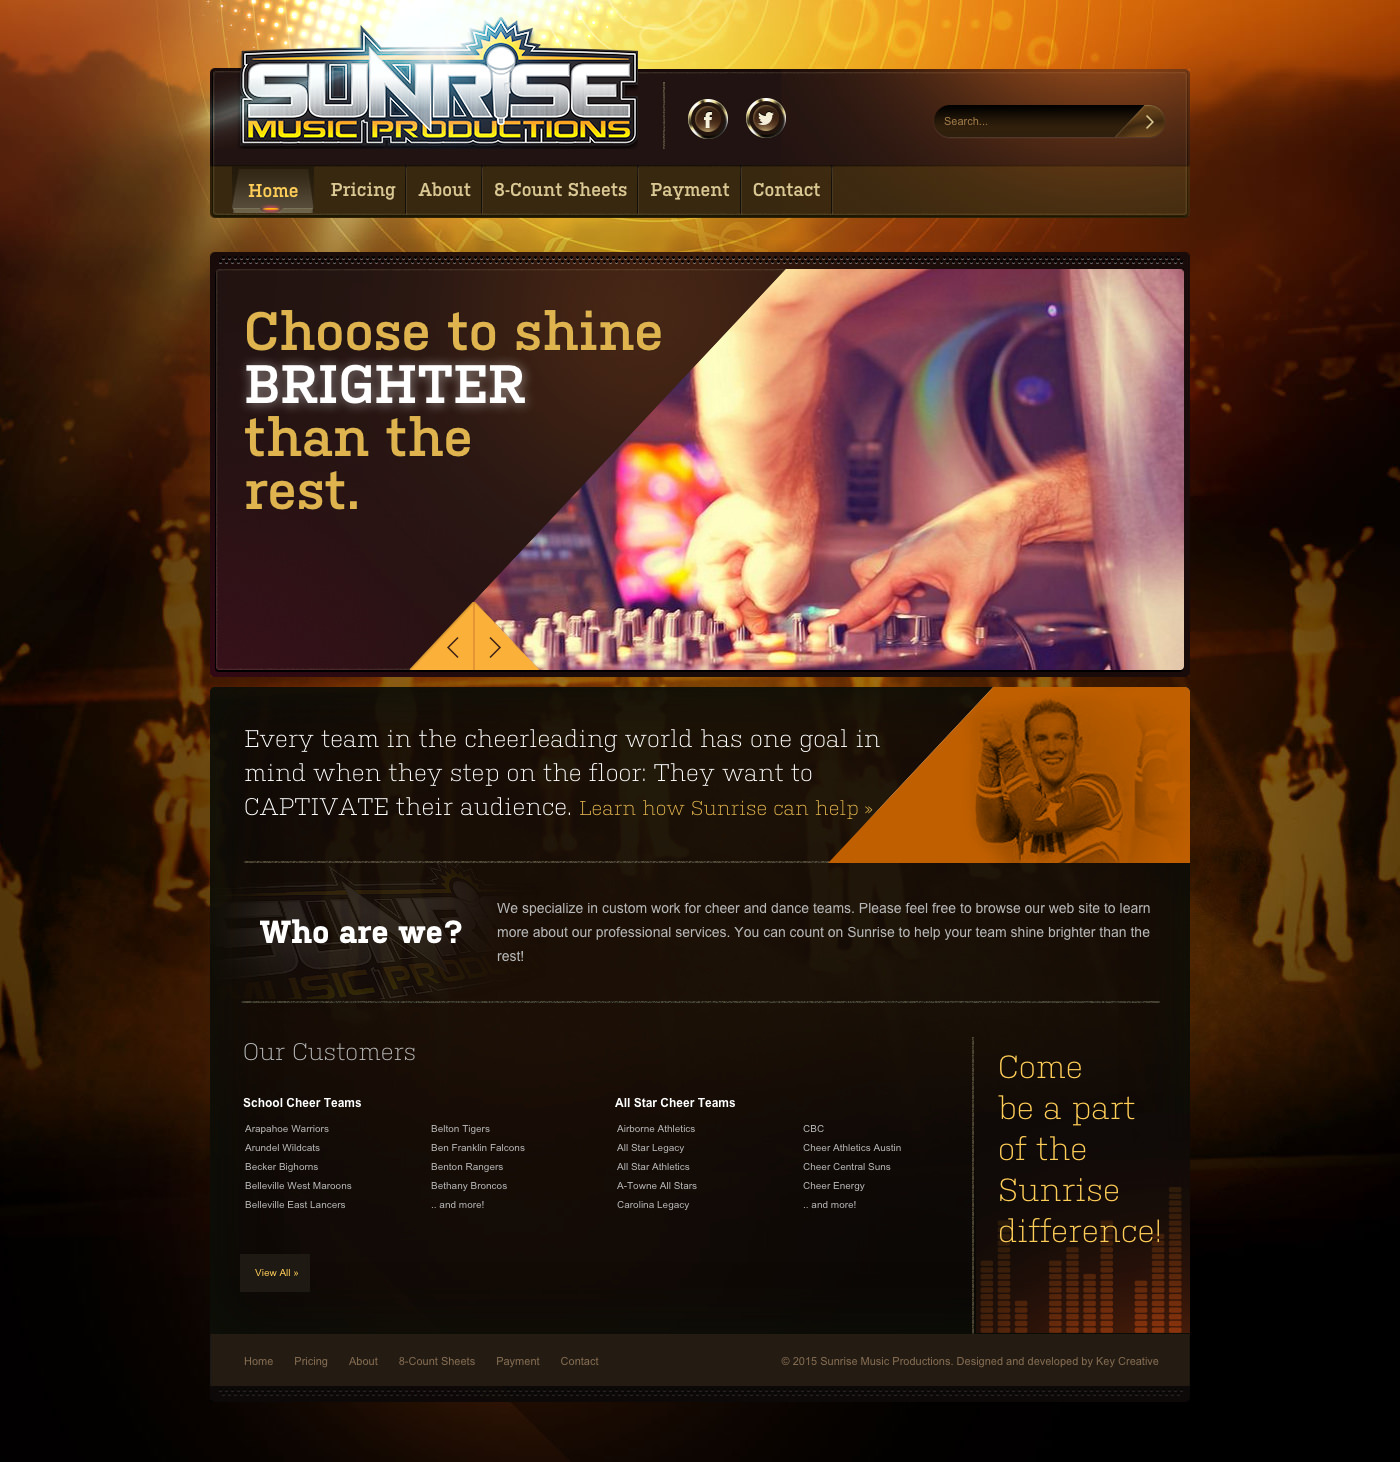 Sunrise Music Productions